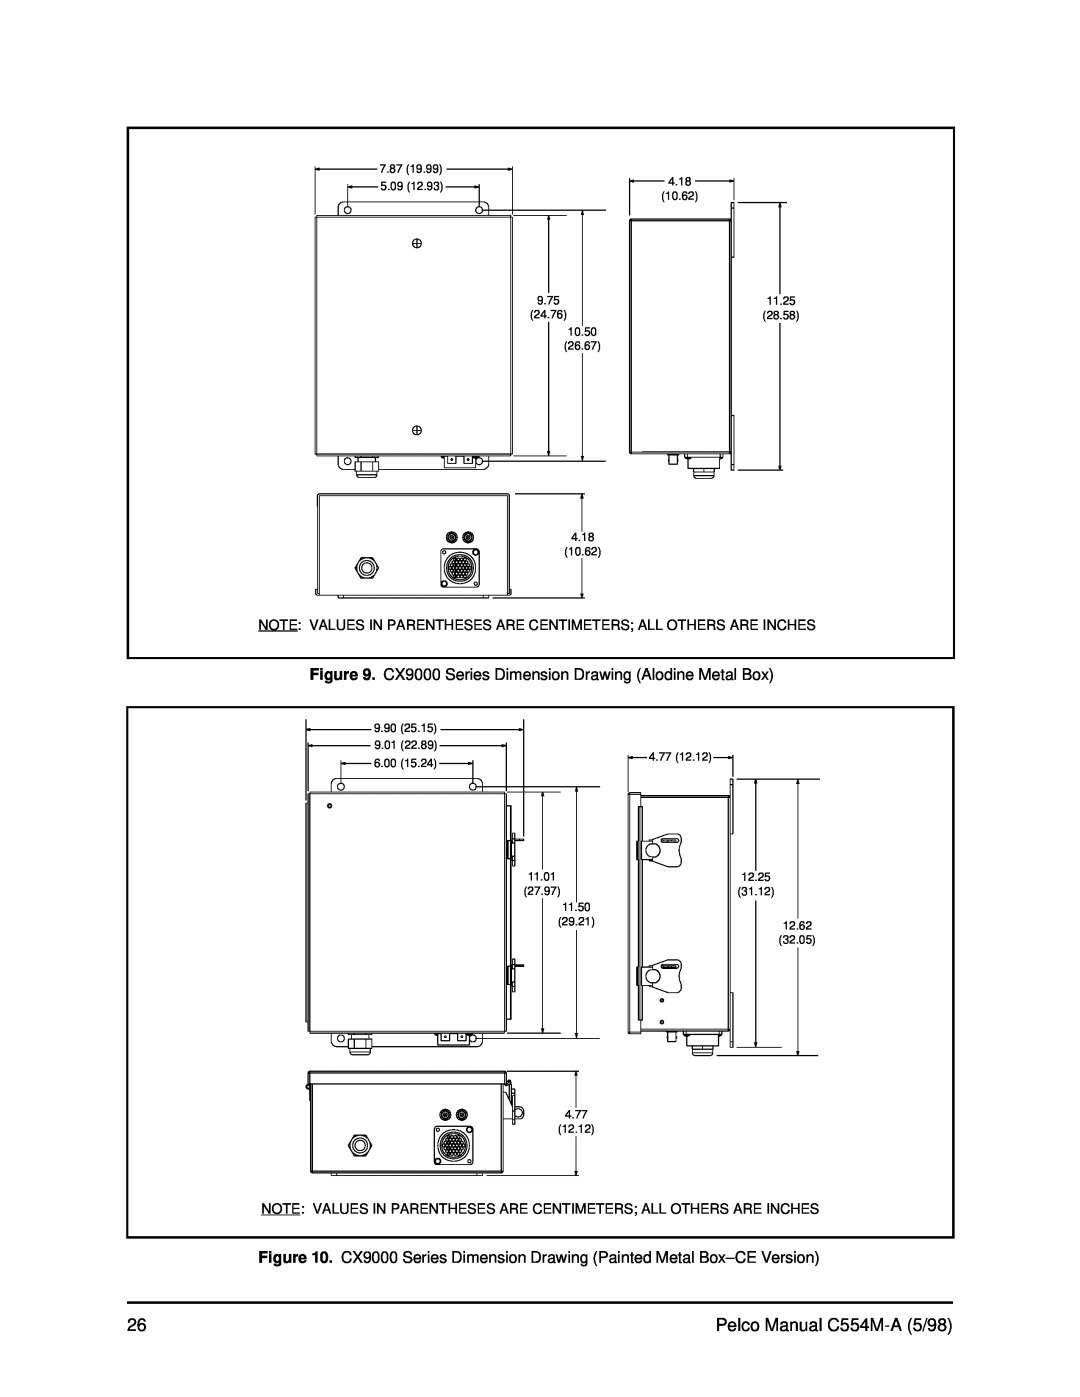 Pelco C554M-A (5/98) operation manual Pelco Manual C554M-A 5/98, CX9000 Series Dimension Drawing Alodine Metal Box 